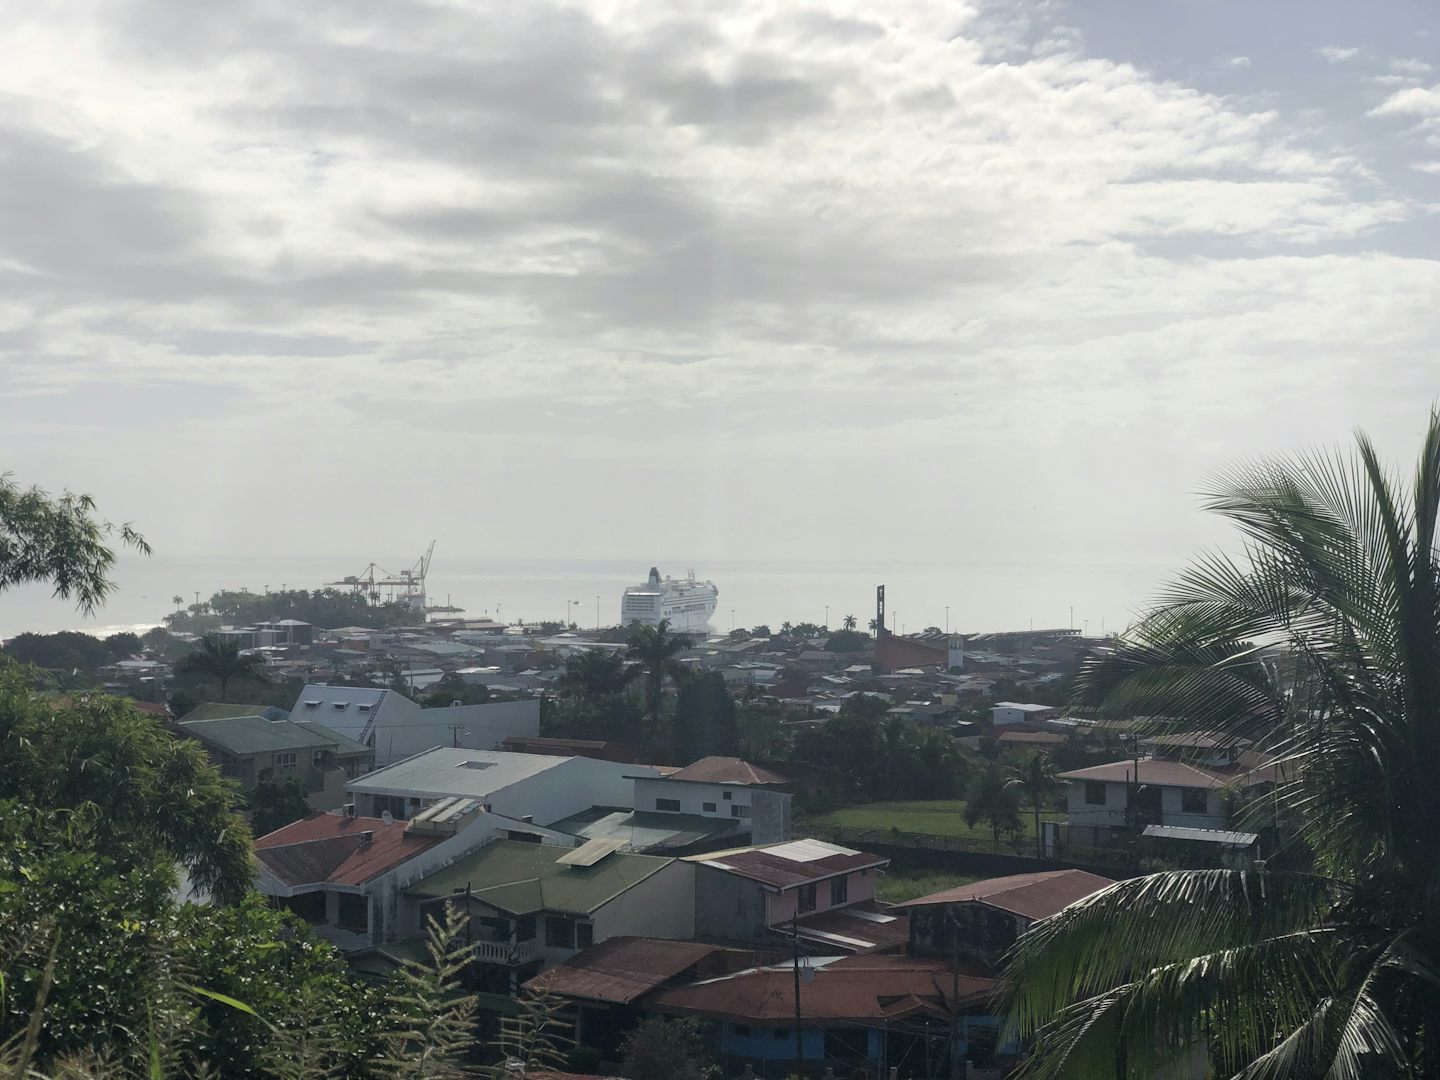 Ship & Harbor from Costa Rica